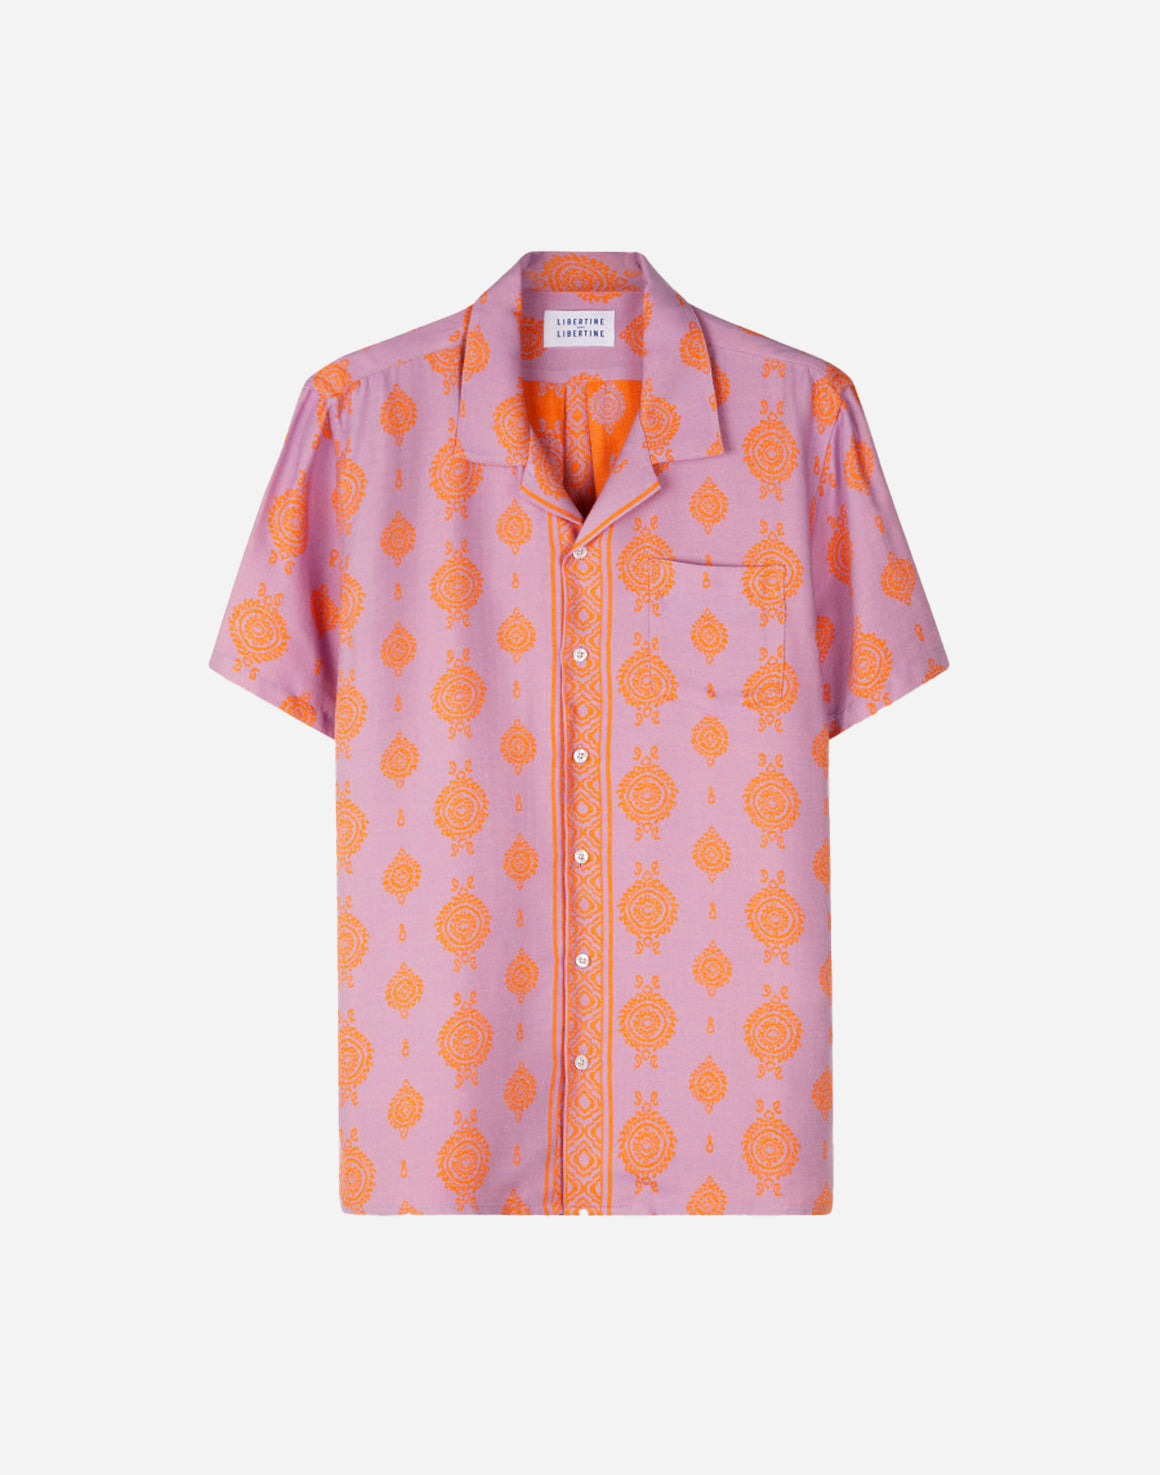 Cave 2312 SS Shirt - Lavender Pink - Libertine-Libertine - Kul og Koks